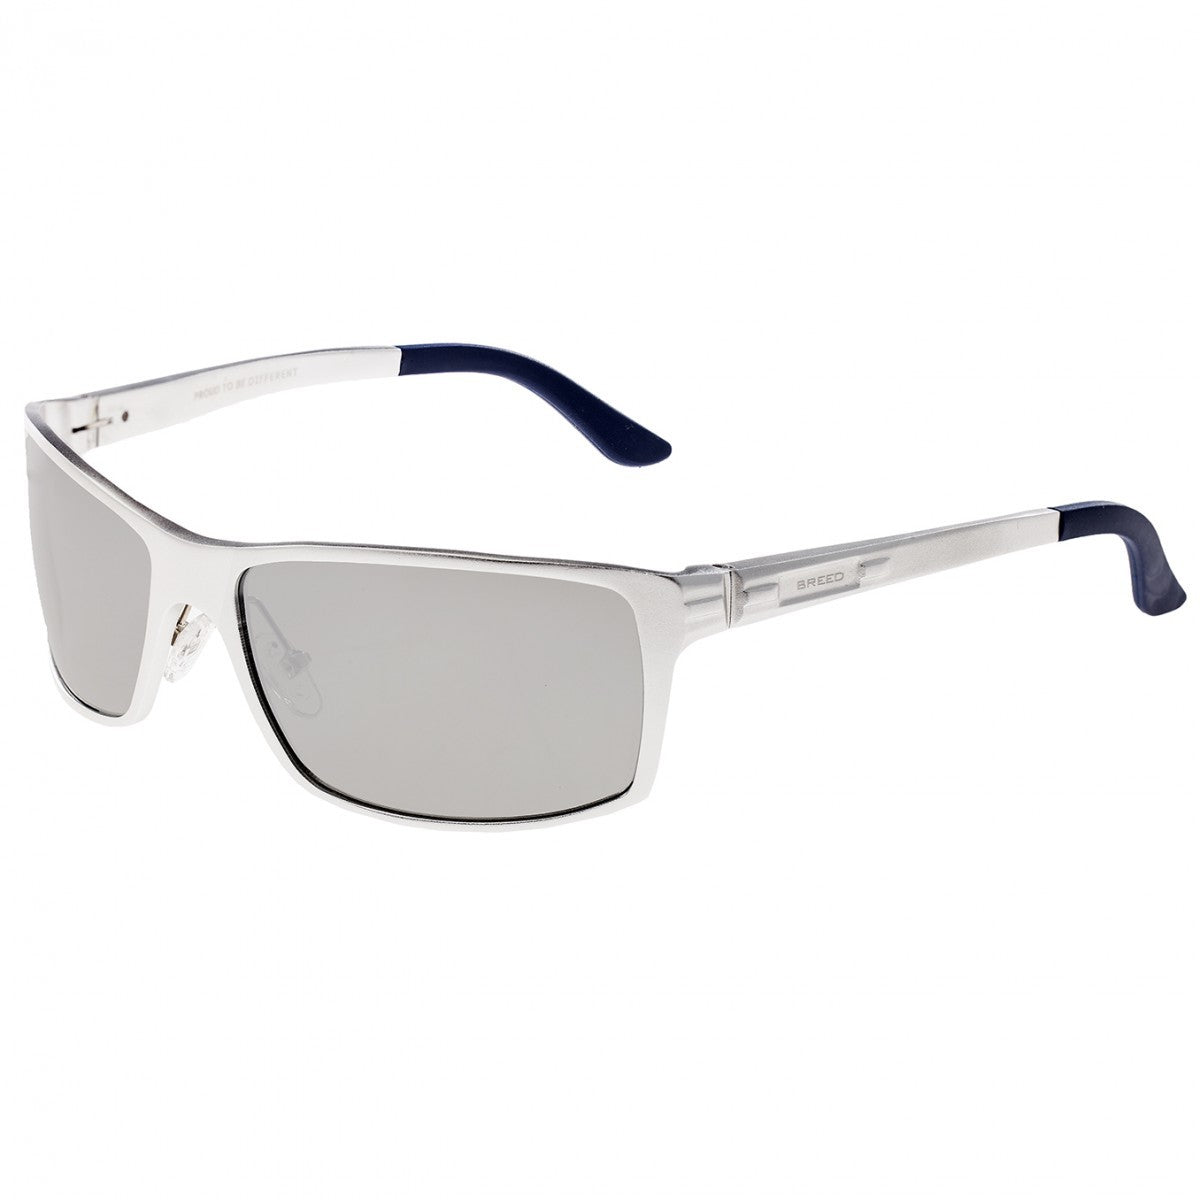 Breed Kaskade Aluminium Polarized Sunglasses - Silver/Silver - BSG016SR